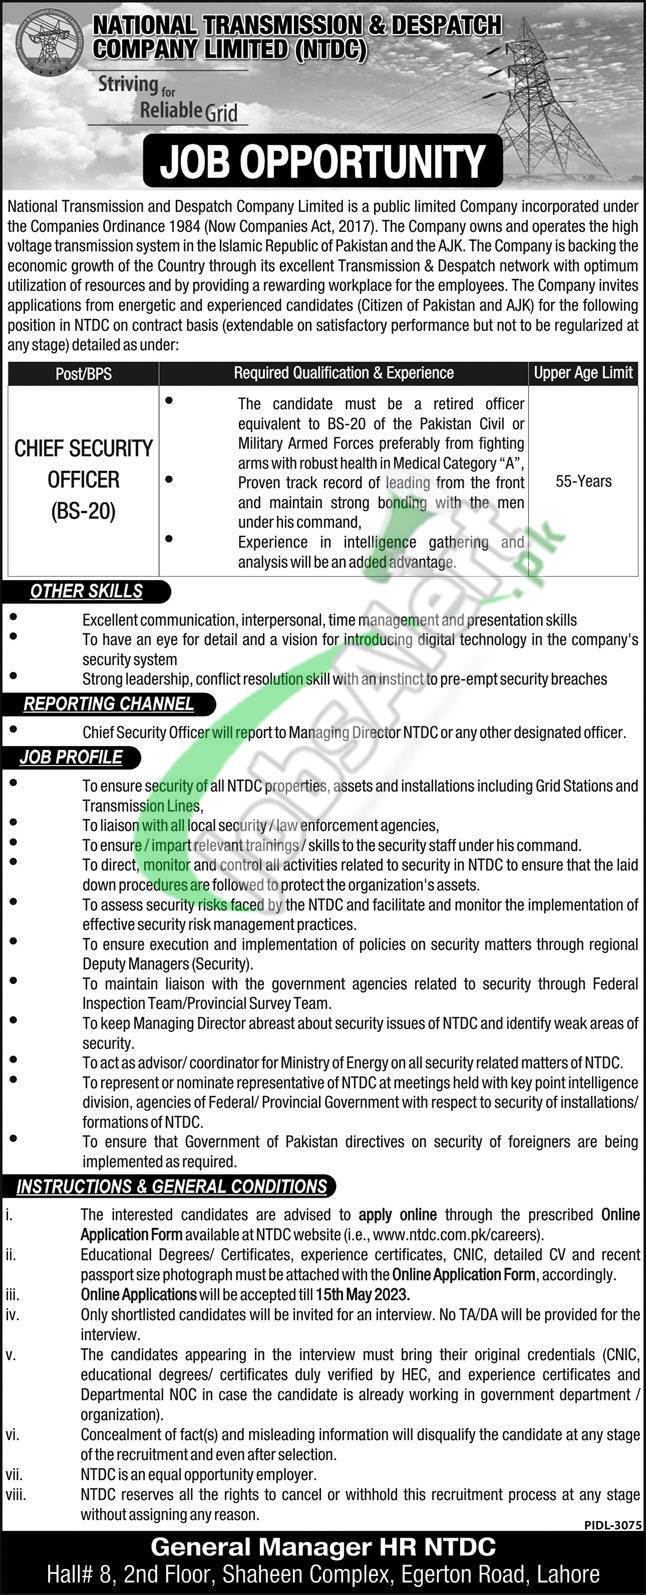 WAPDA NTDC Jobs Application Form 2023 Download Online www.ntdc.com.pk